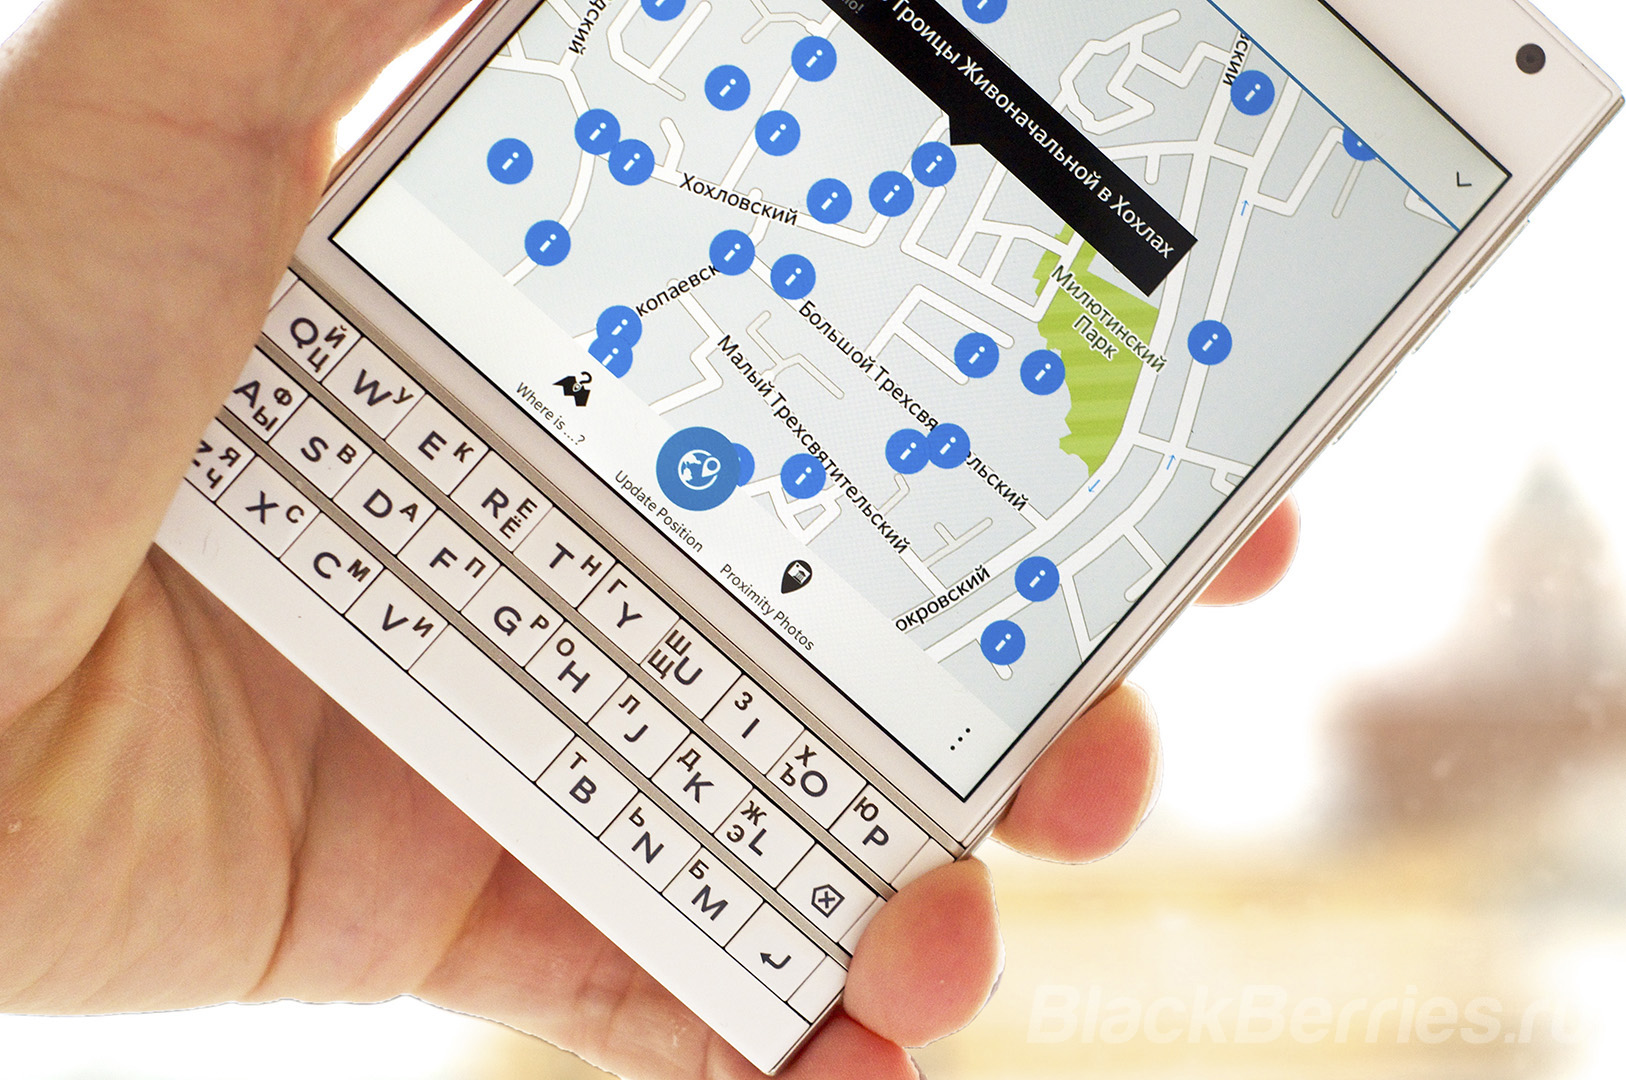 BlackBerry-Passport-Apps-White-03